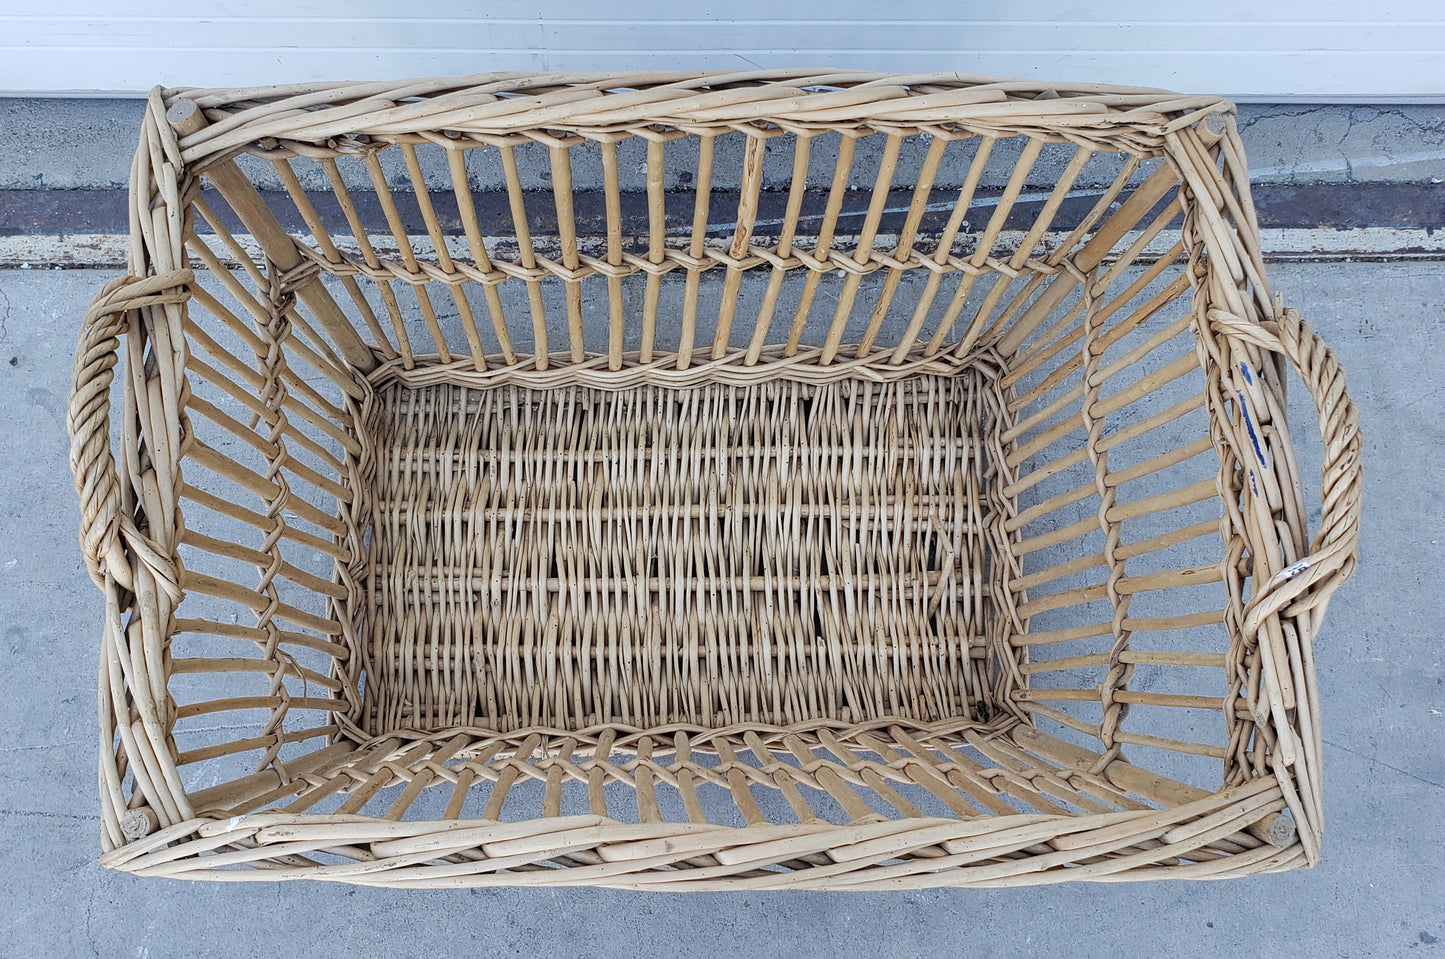 French Market Basket